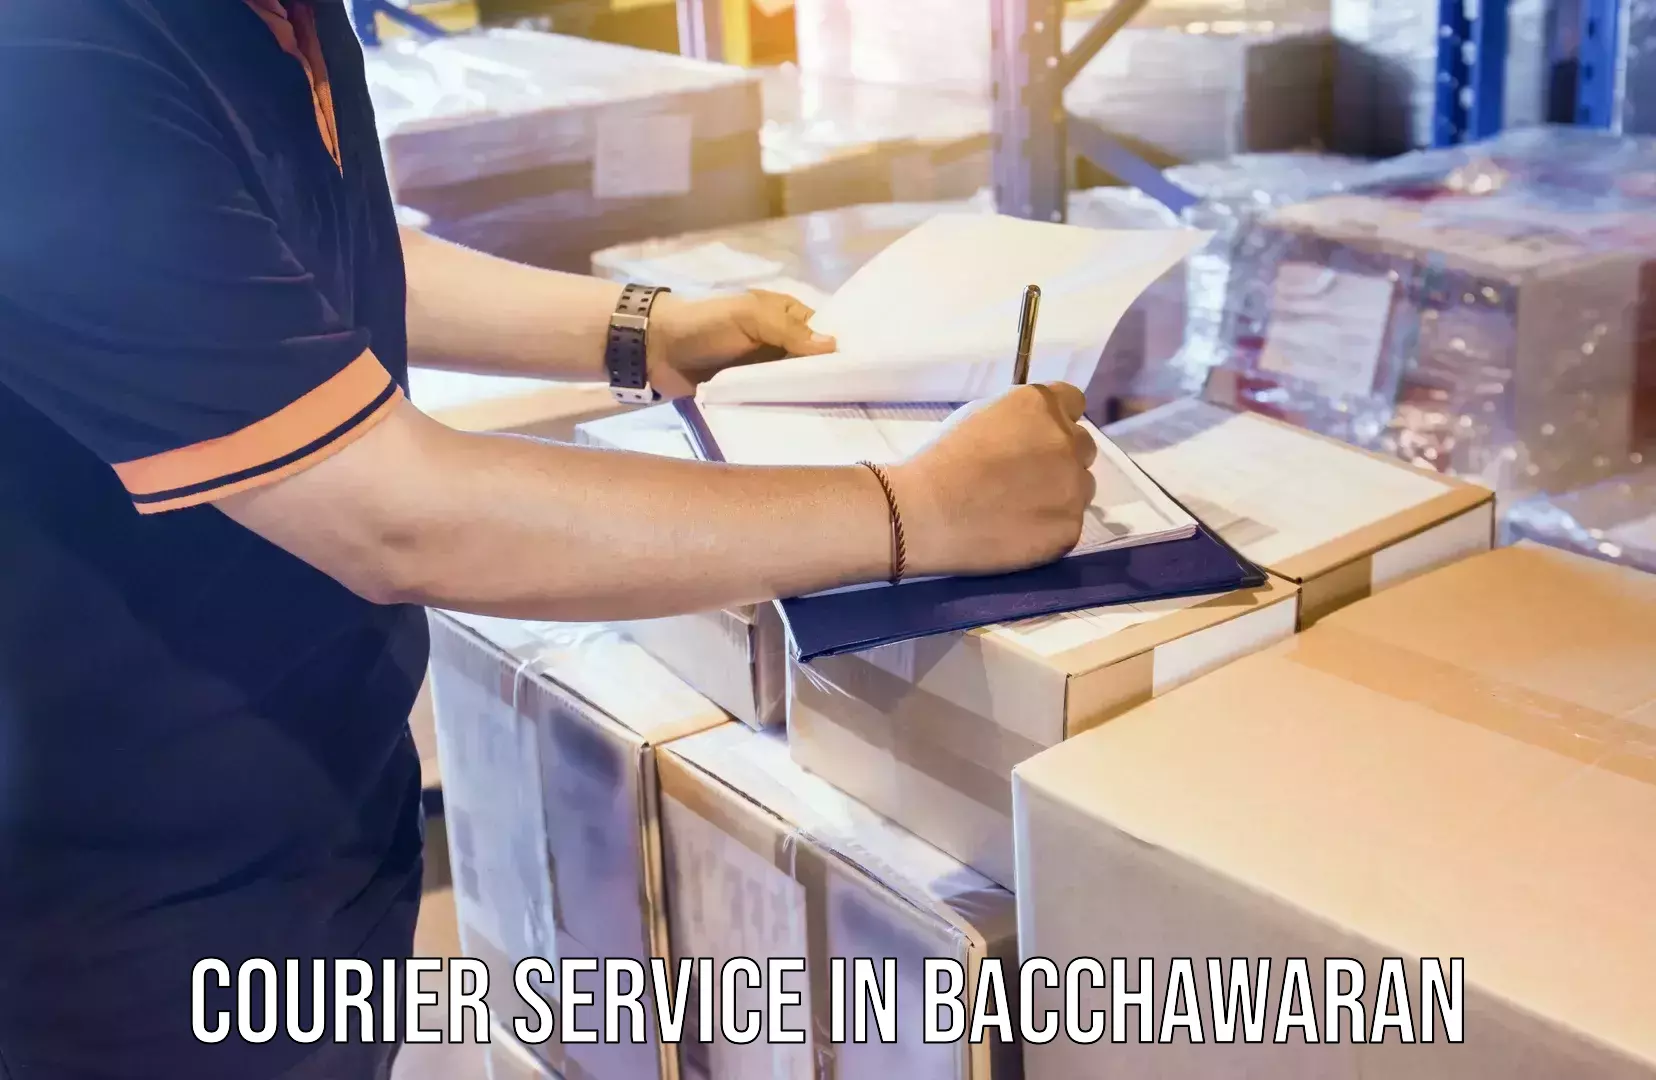 Quick parcel dispatch in Bacchawaran